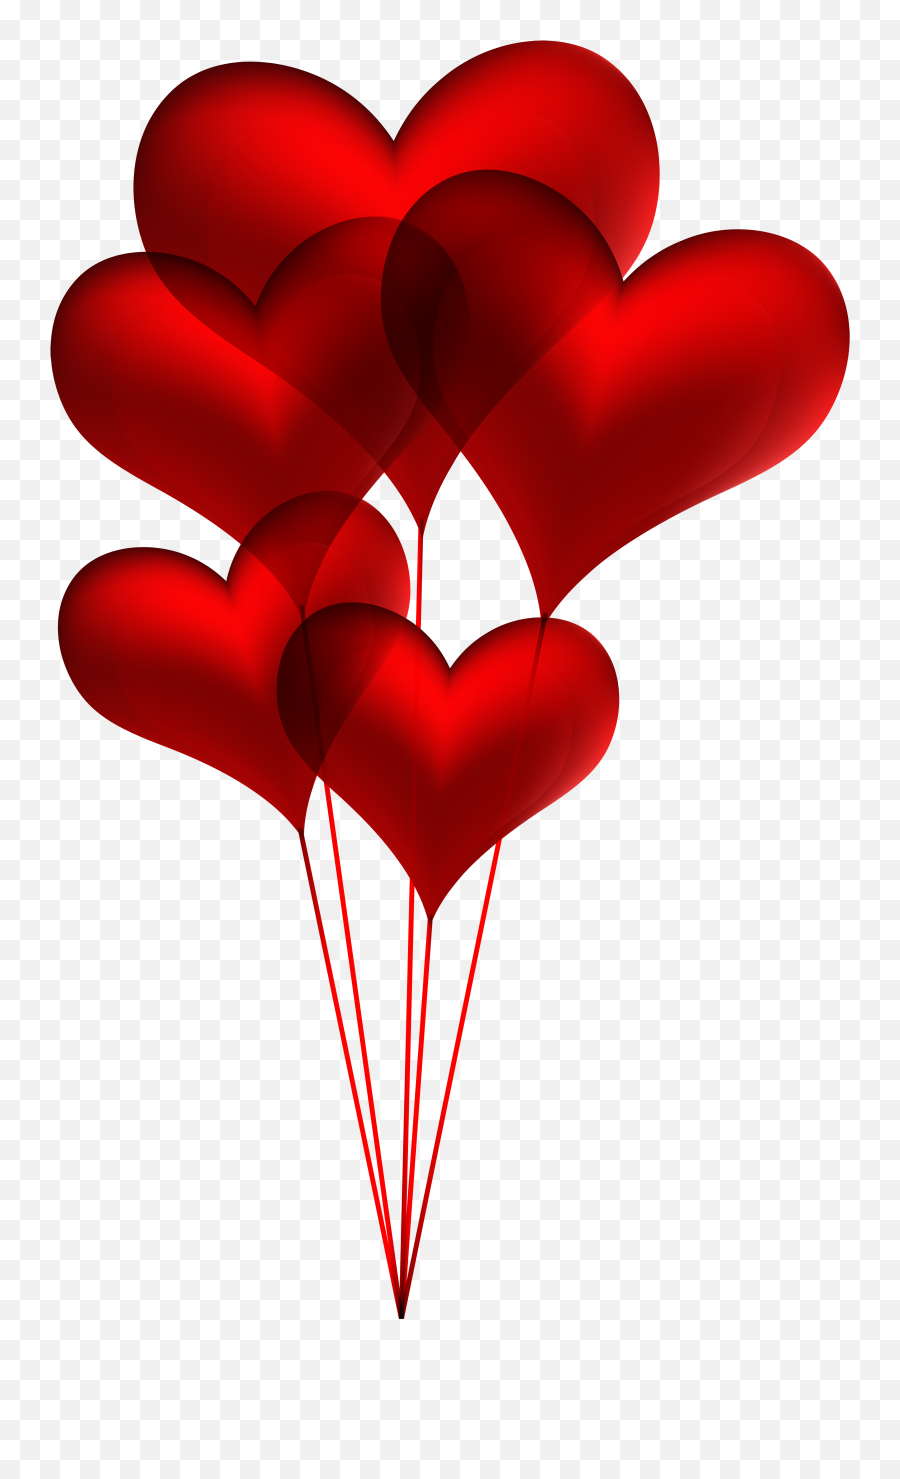 630 La Multi Ideas In 2021 - Transparent Background Heart Balloon Clipart Emoji,Hummingbird Emoji Android